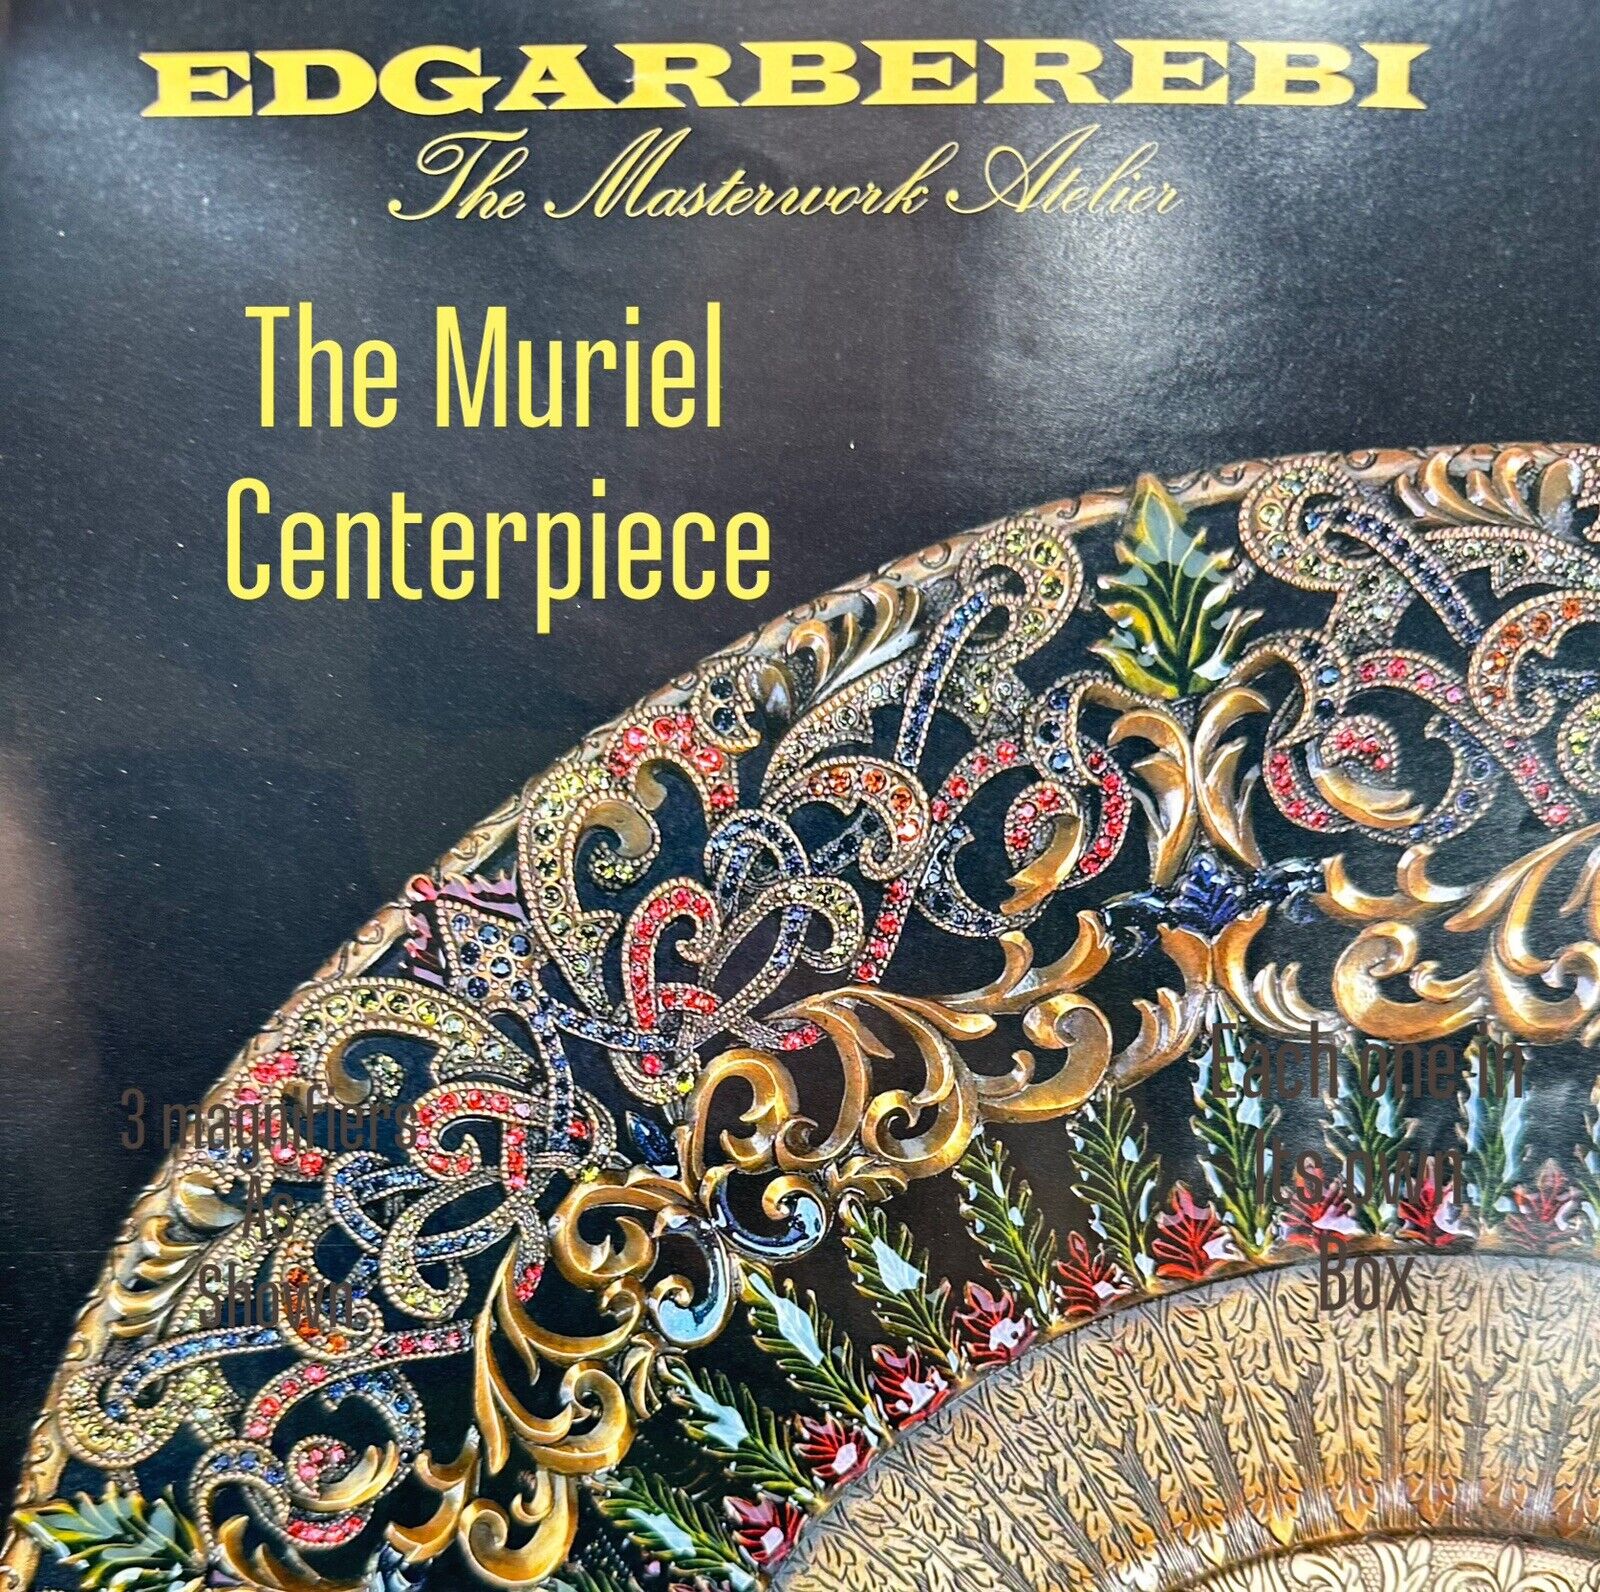 I Am Edgar Berebi Muriel Center piece , 7.5 Lb  14 inches wide 4.25  1600 Stones